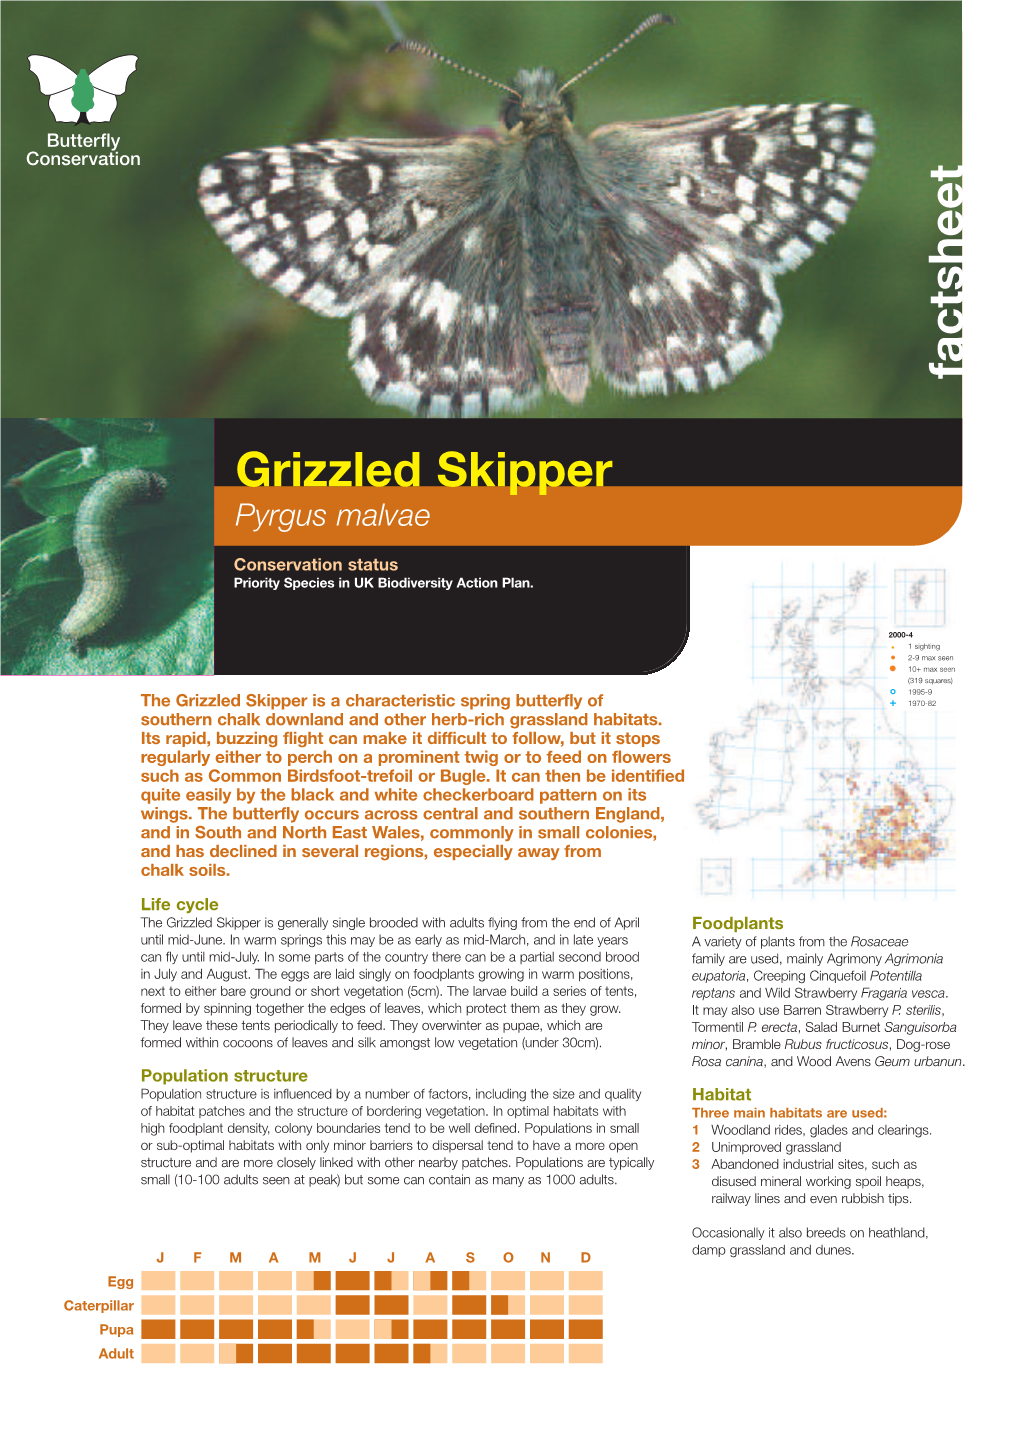 Grizzled Skipper Priority Species Factsheet